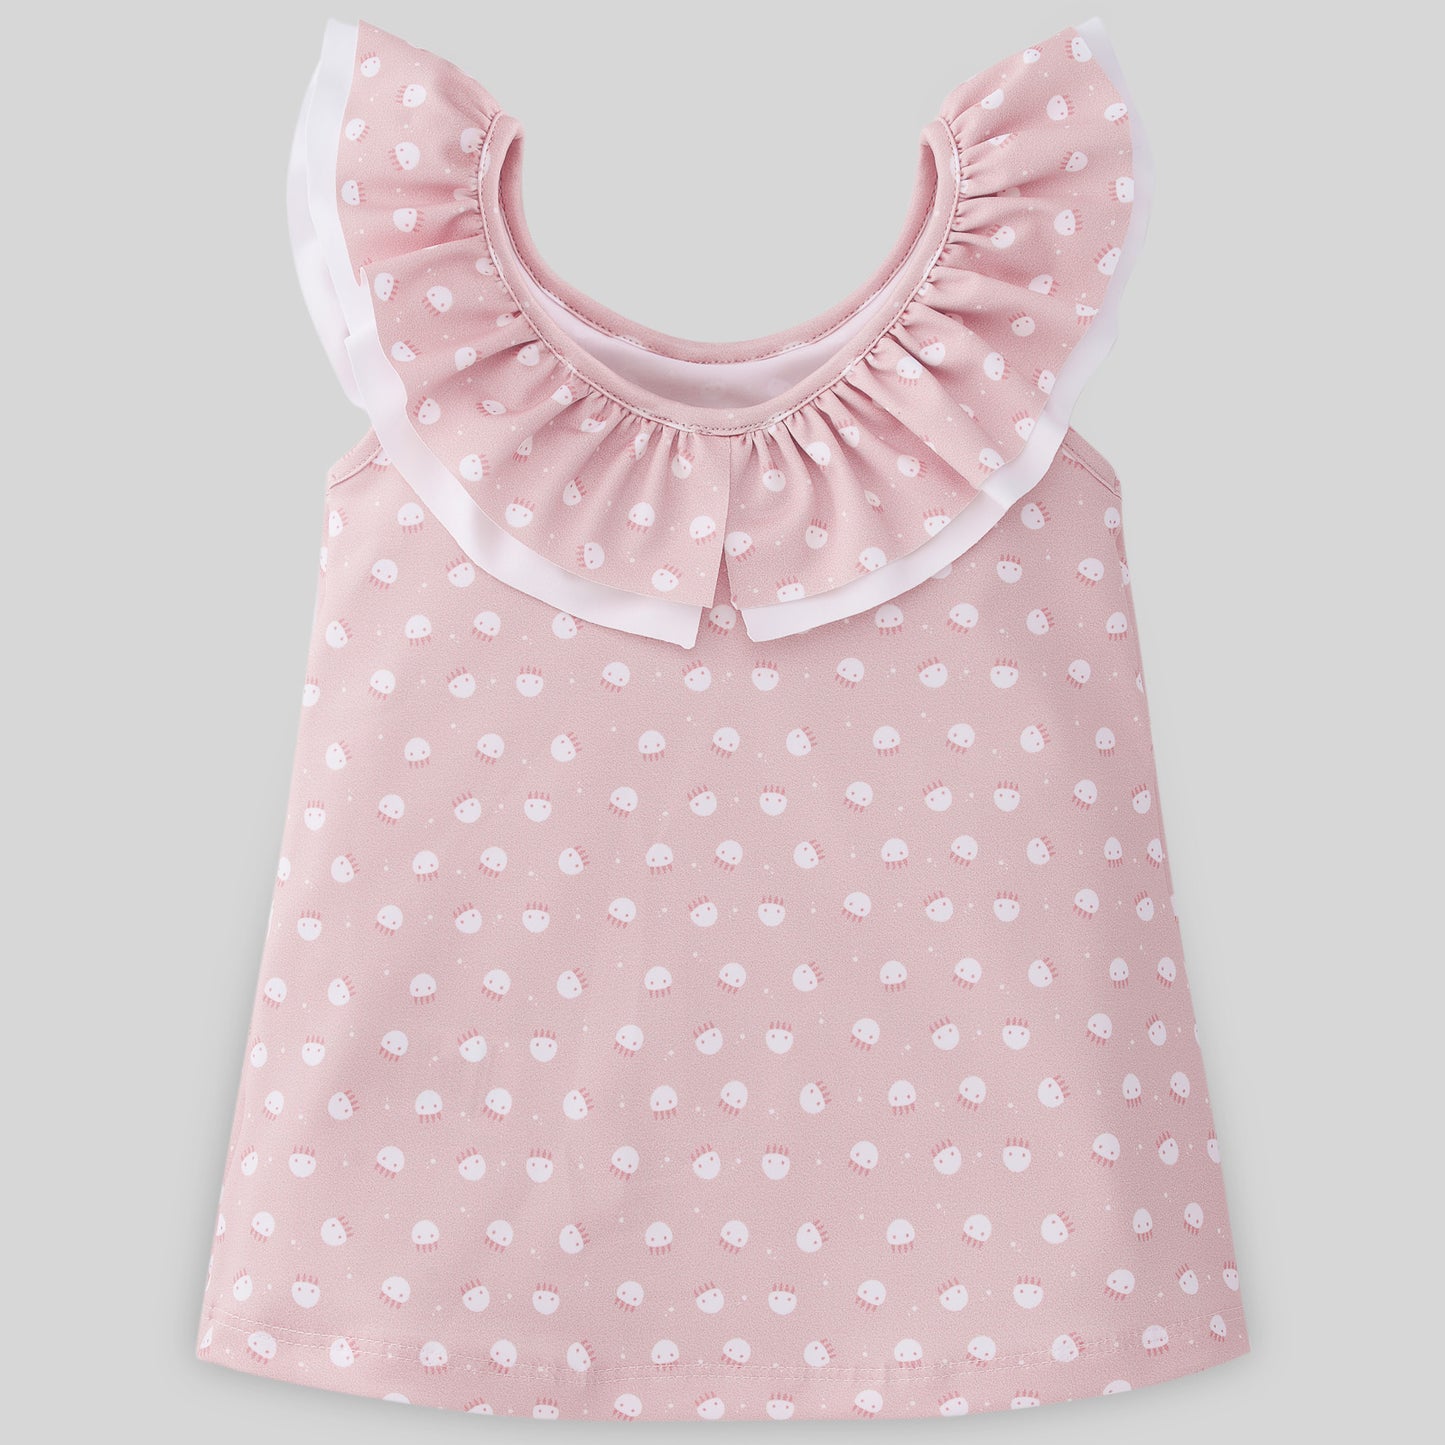 PAZ RODRIGUEZ Pink-White Jellyfish patterned dress